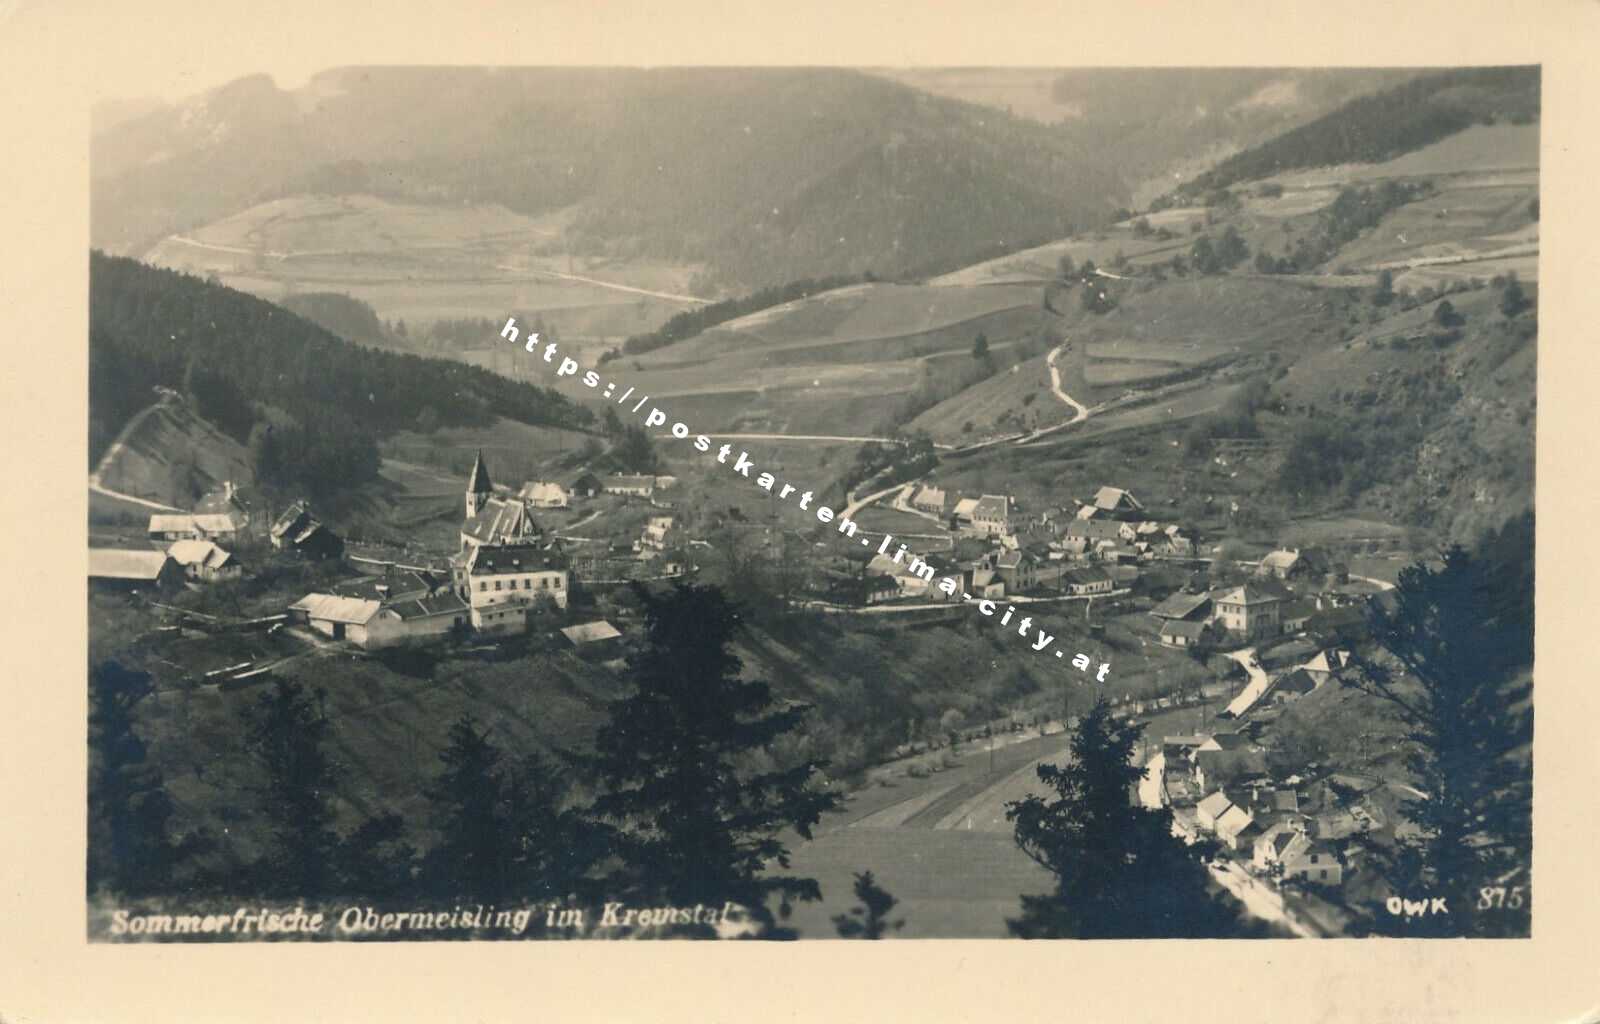 Obermeisling 1953